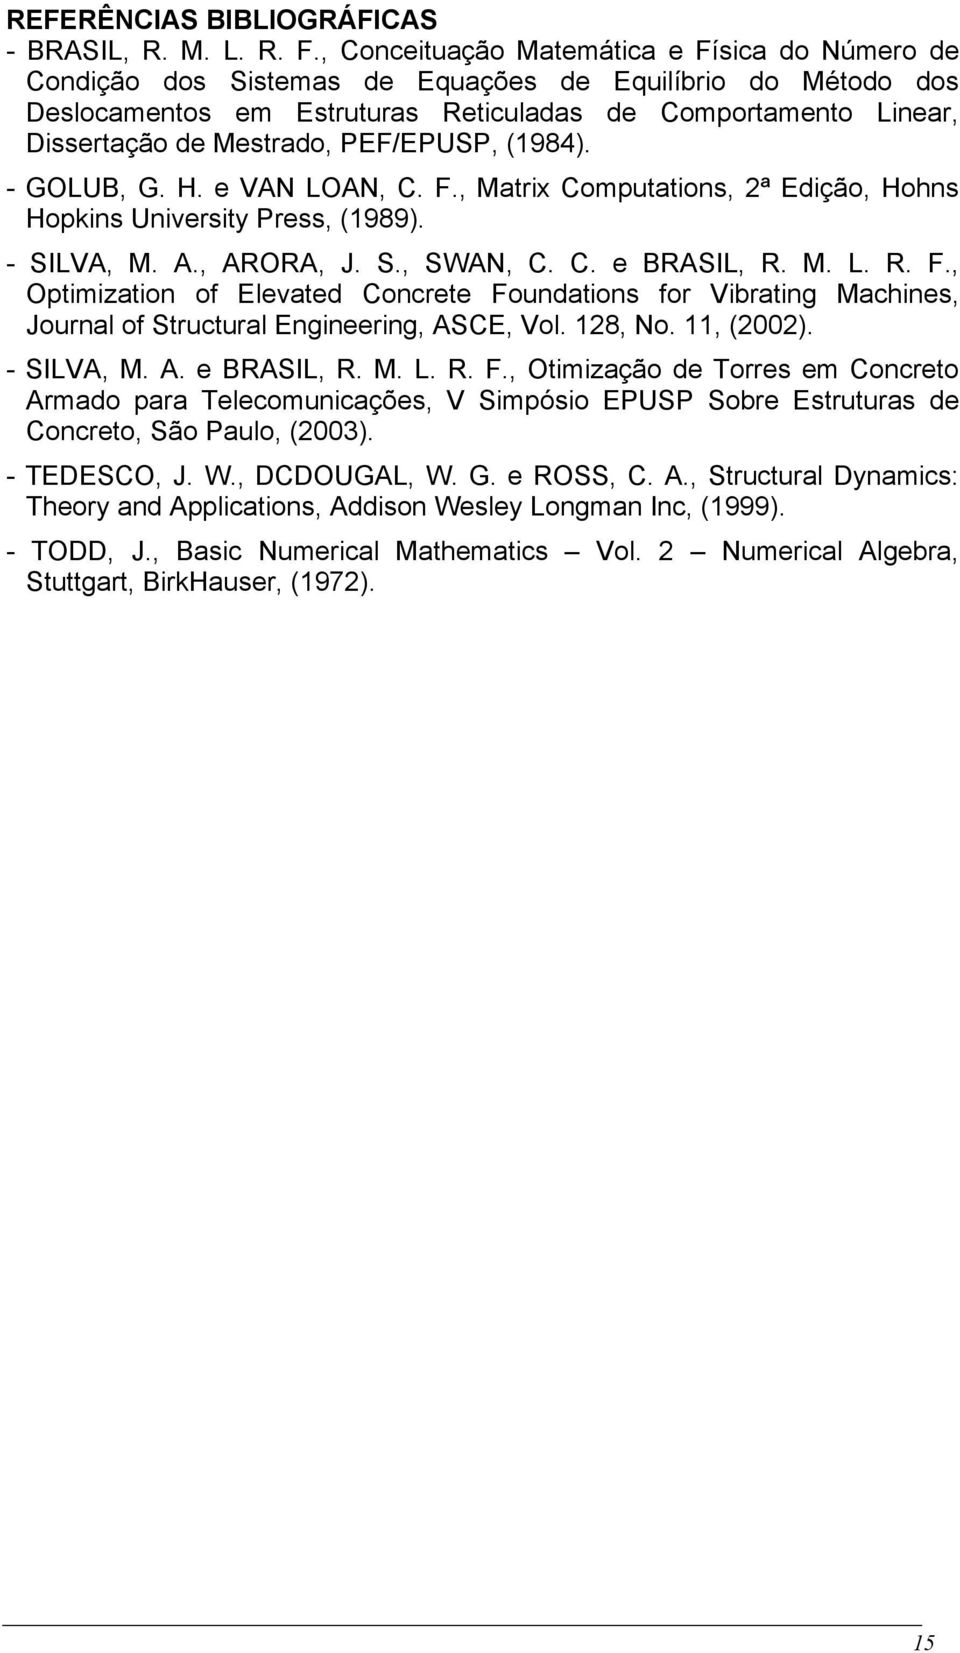 PEF/EPUSP, (1984). - GOLUB, G. H. e VAN LOAN, C. F., Matrix Computations, 2ª Edição, Hohns Hopkins University Press, (1989). - SILVA, M. A., ARORA, J. S., SWAN, C. C. e BRASIL, R. M. L. R. F., Optimization of Elevated Concrete Foundations for Vibrating Machines, Journal of Structural Engineering, ASCE, Vol.